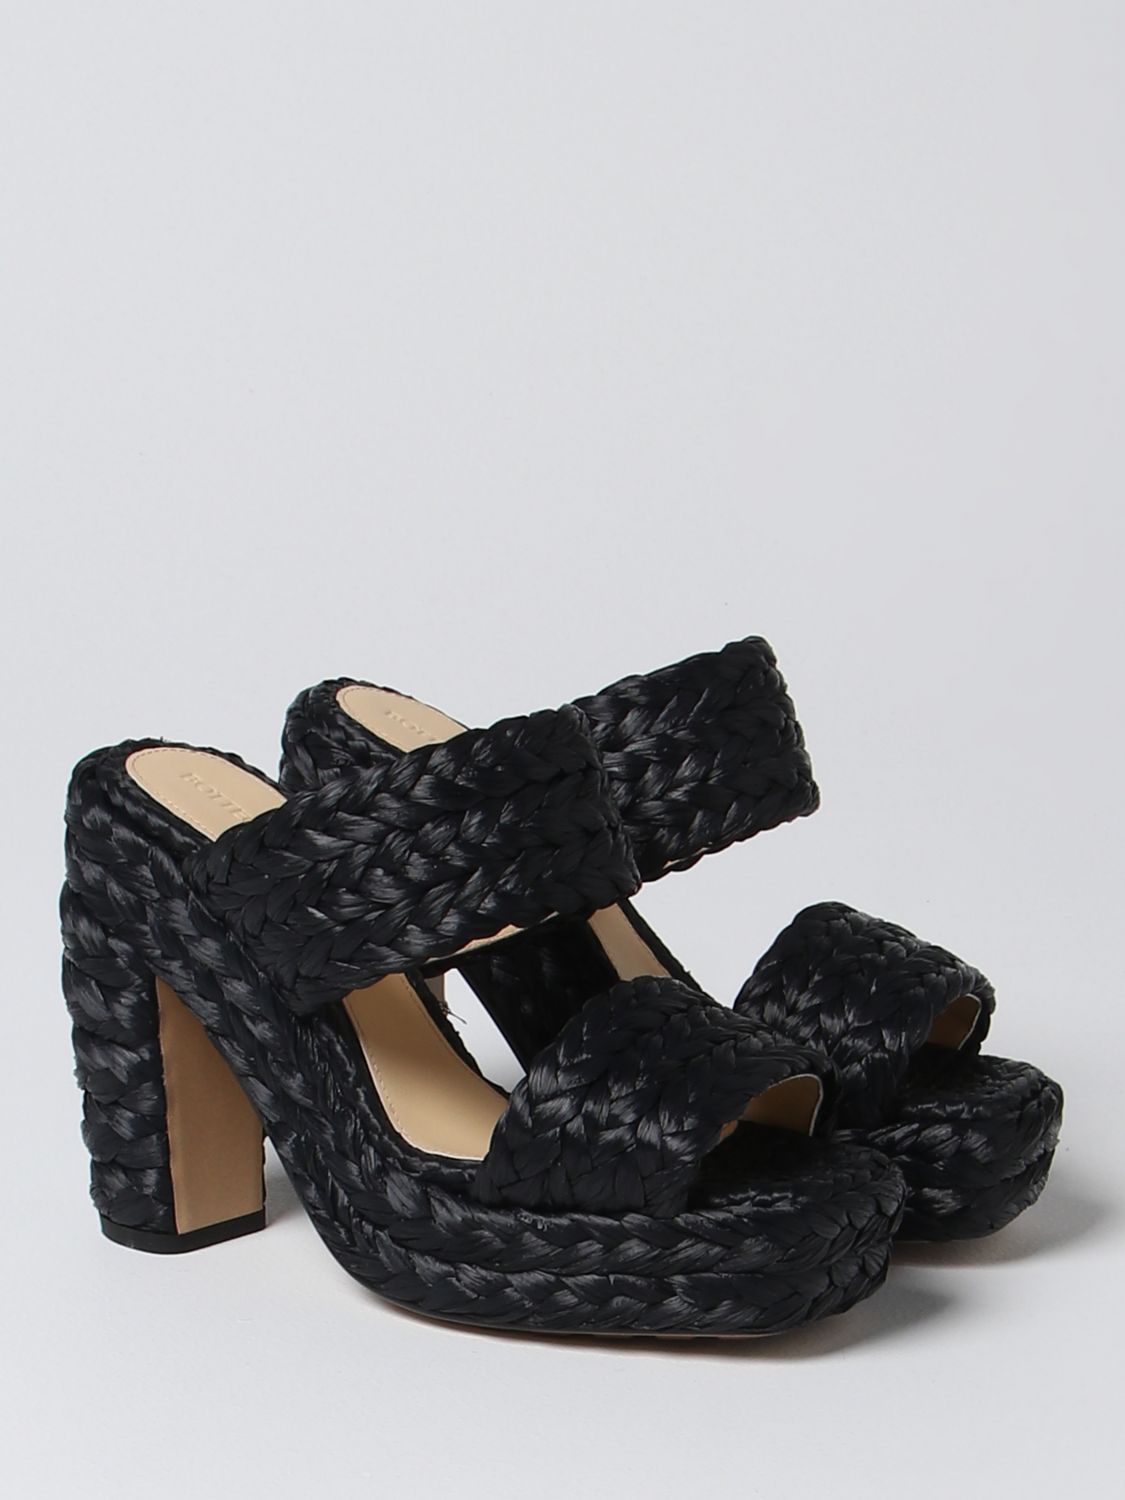 BOTTEGA VENETA: sandal in woven raffia - Black | Bottega Veneta heeled ...